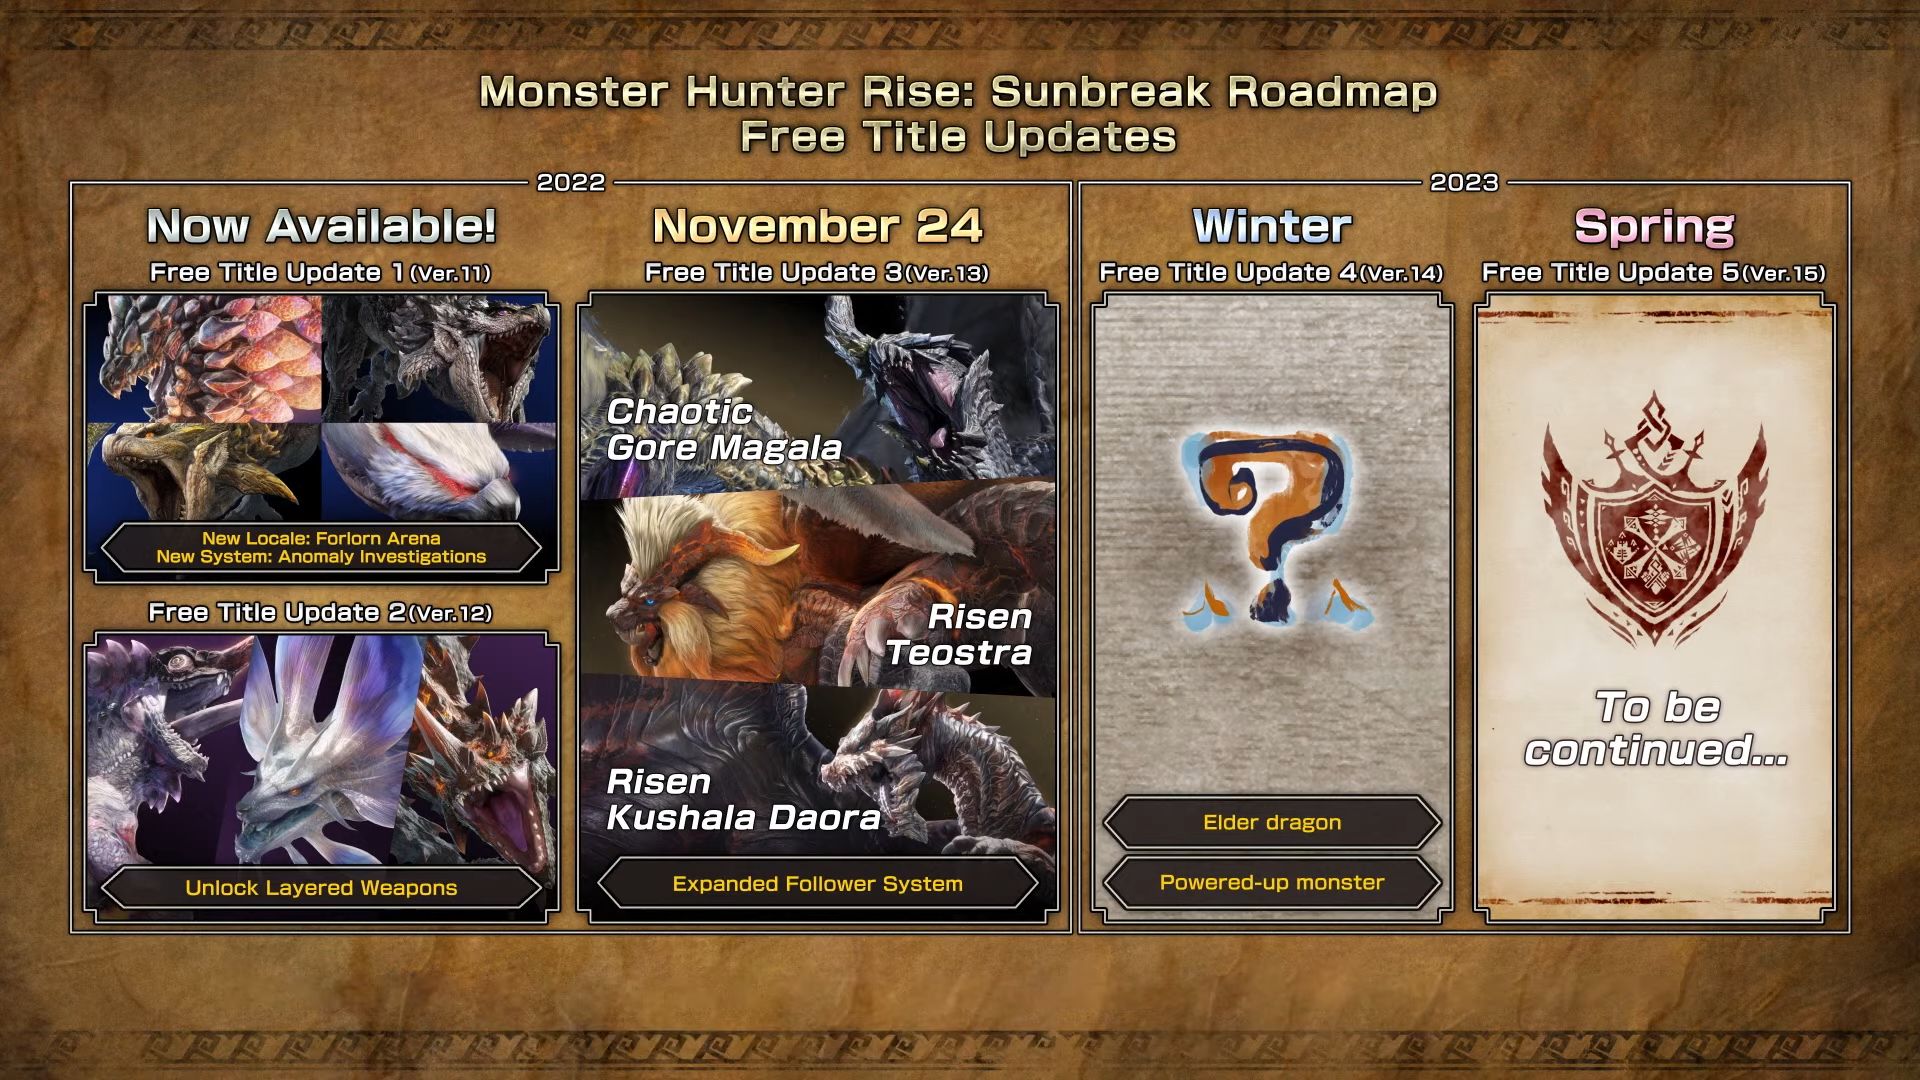 Monster Hunter Rise Sunbreak update 4 patch notes revealed